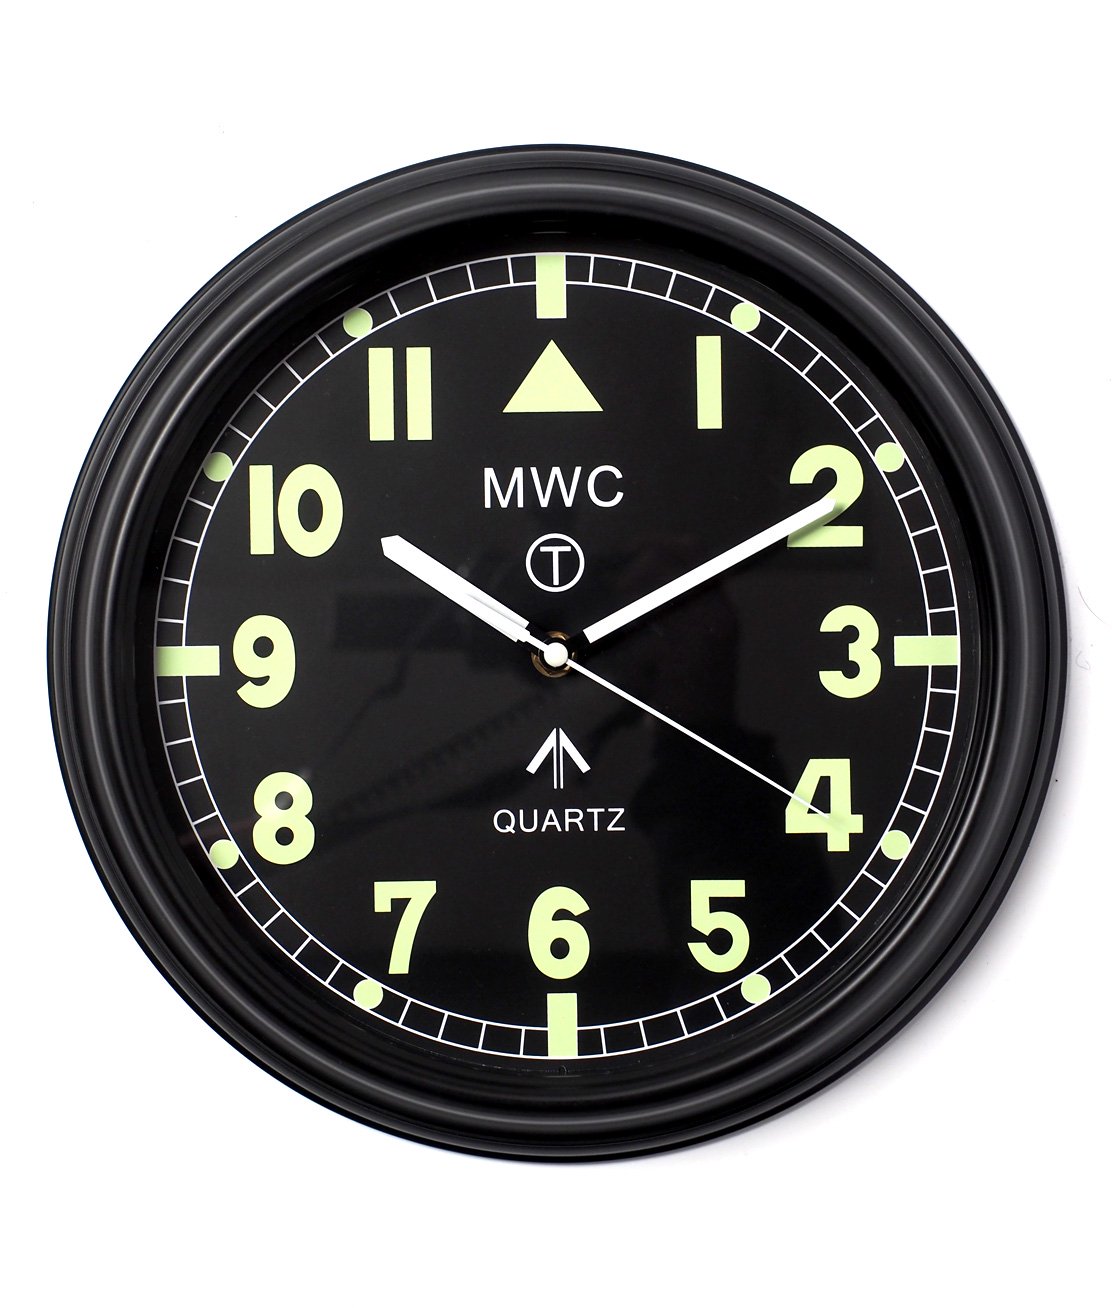 MWC】RETRO G10 PATTERN MILITARY WALL CLOCK イギリス軍 壁掛け時計